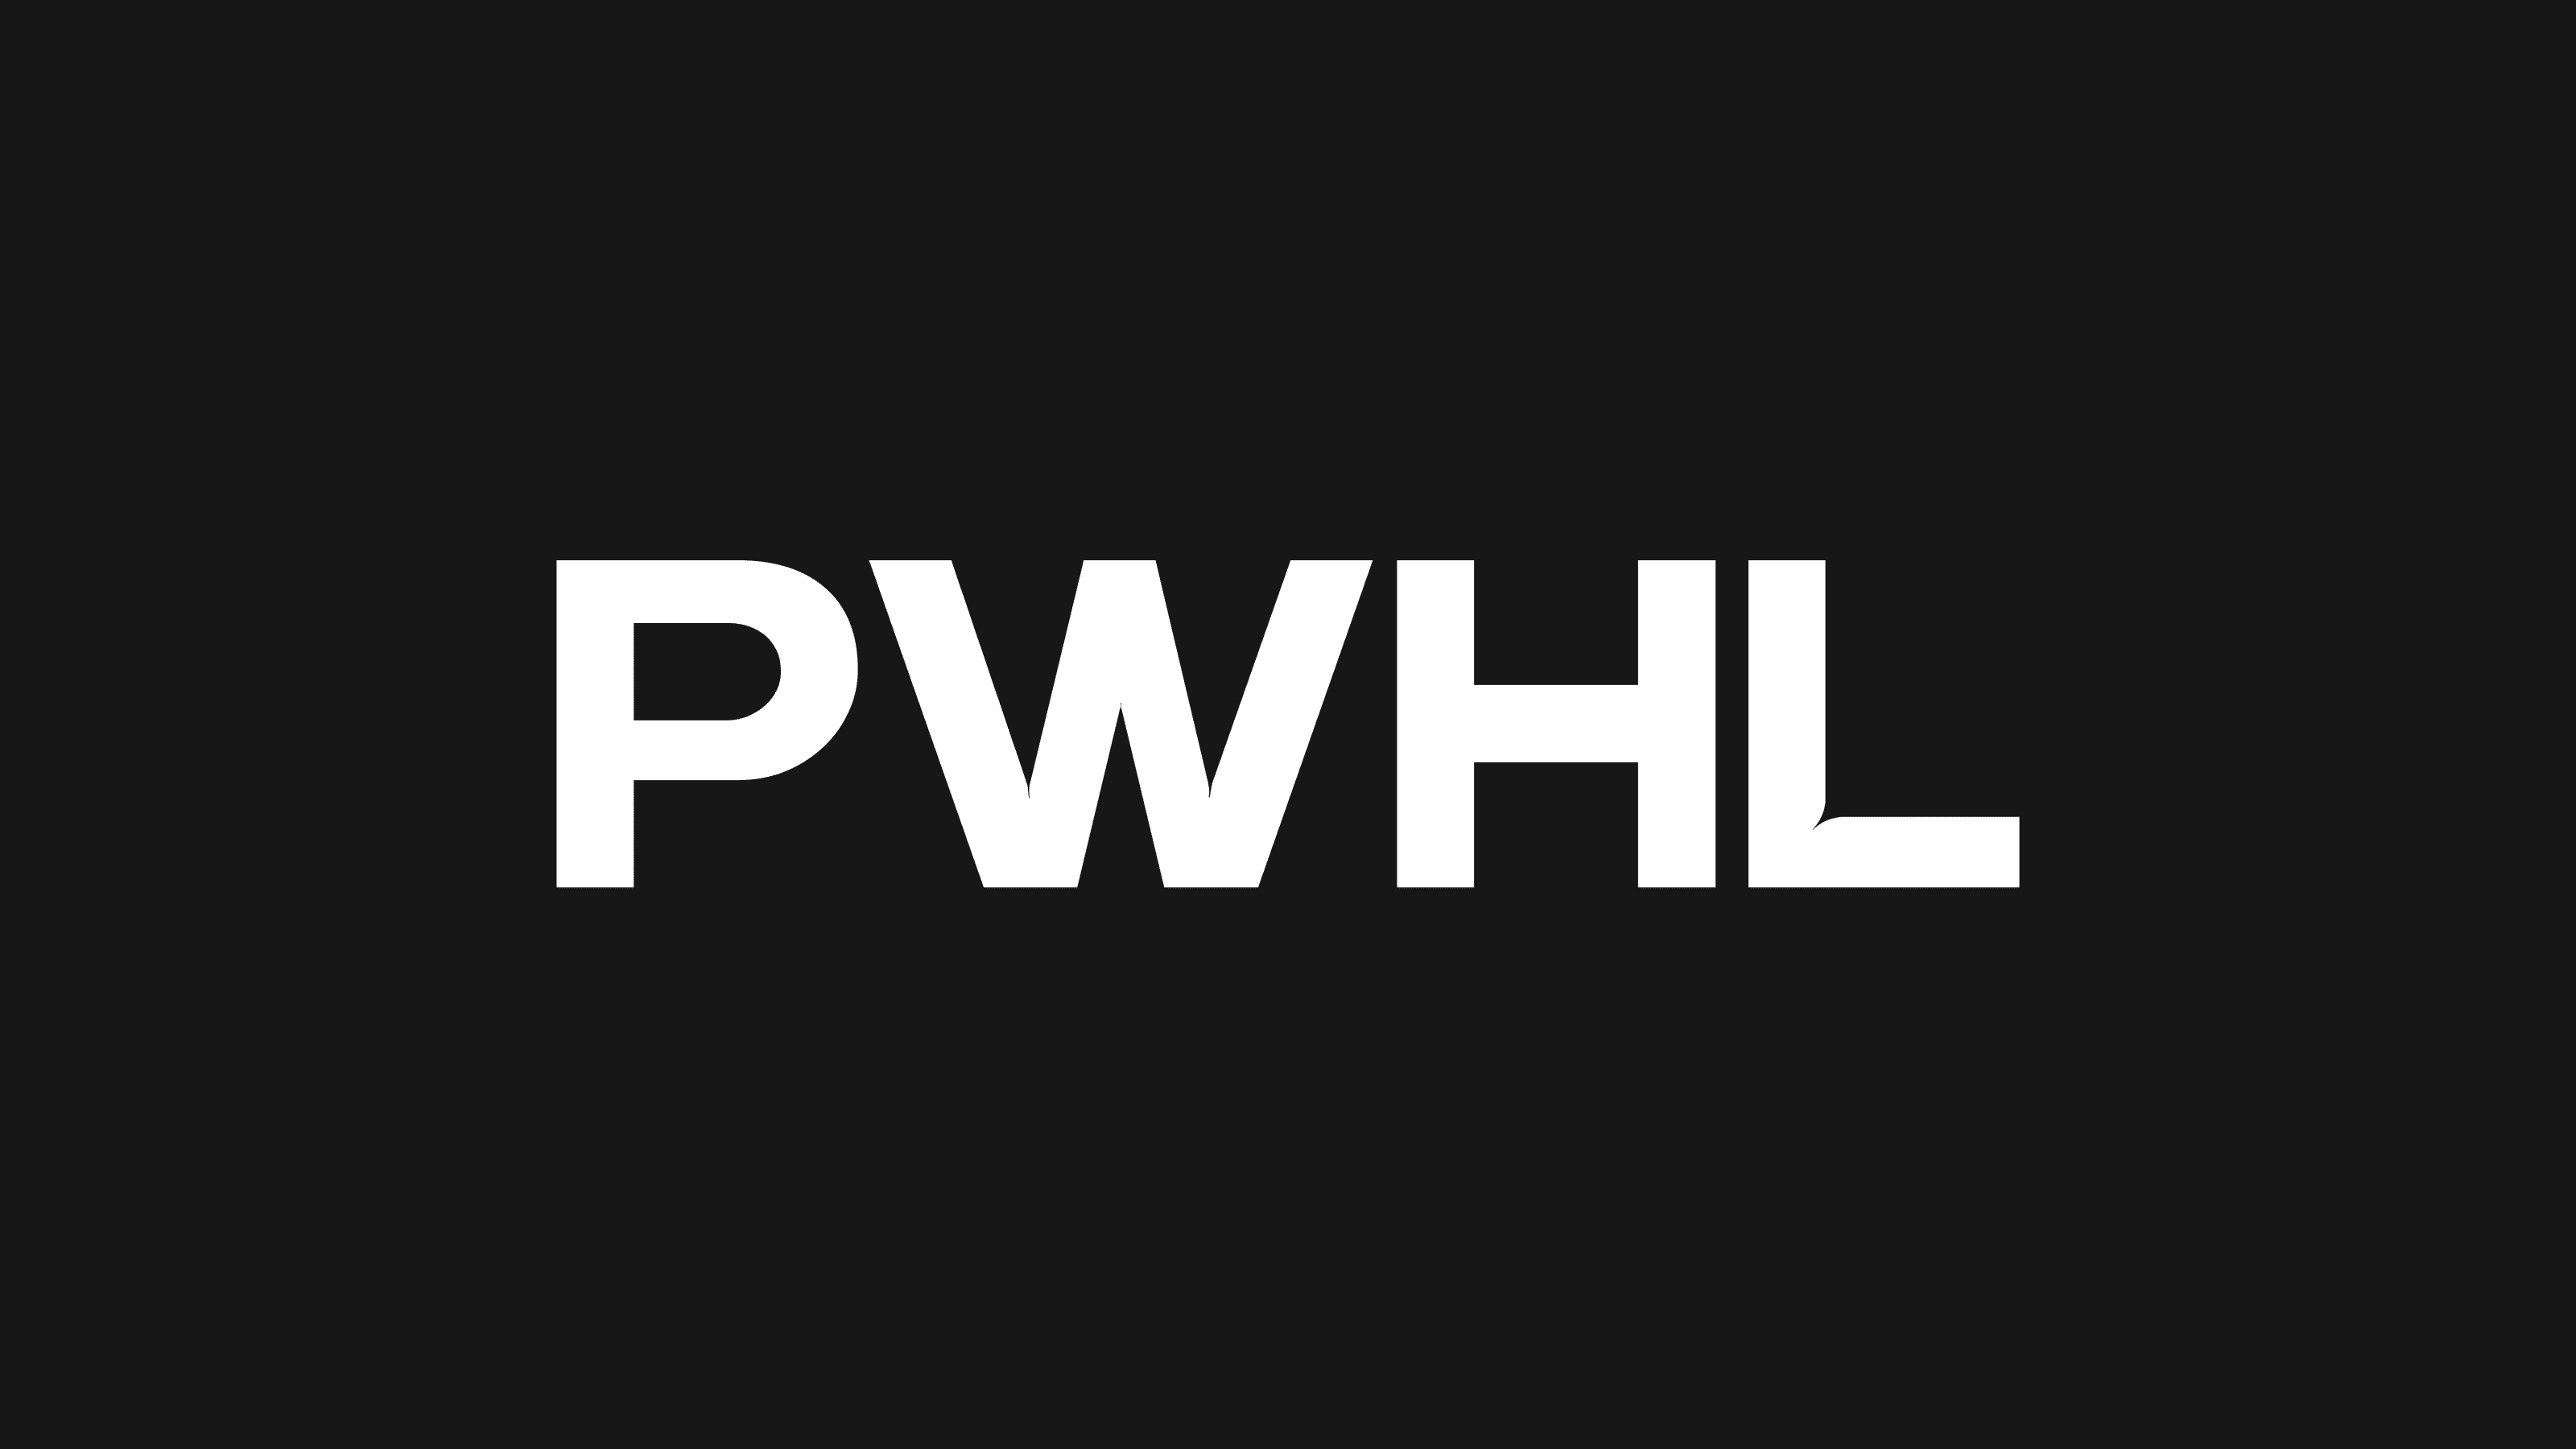 PWHL Ottawa’s home opener will break North American attendance record for women’s professional hockey